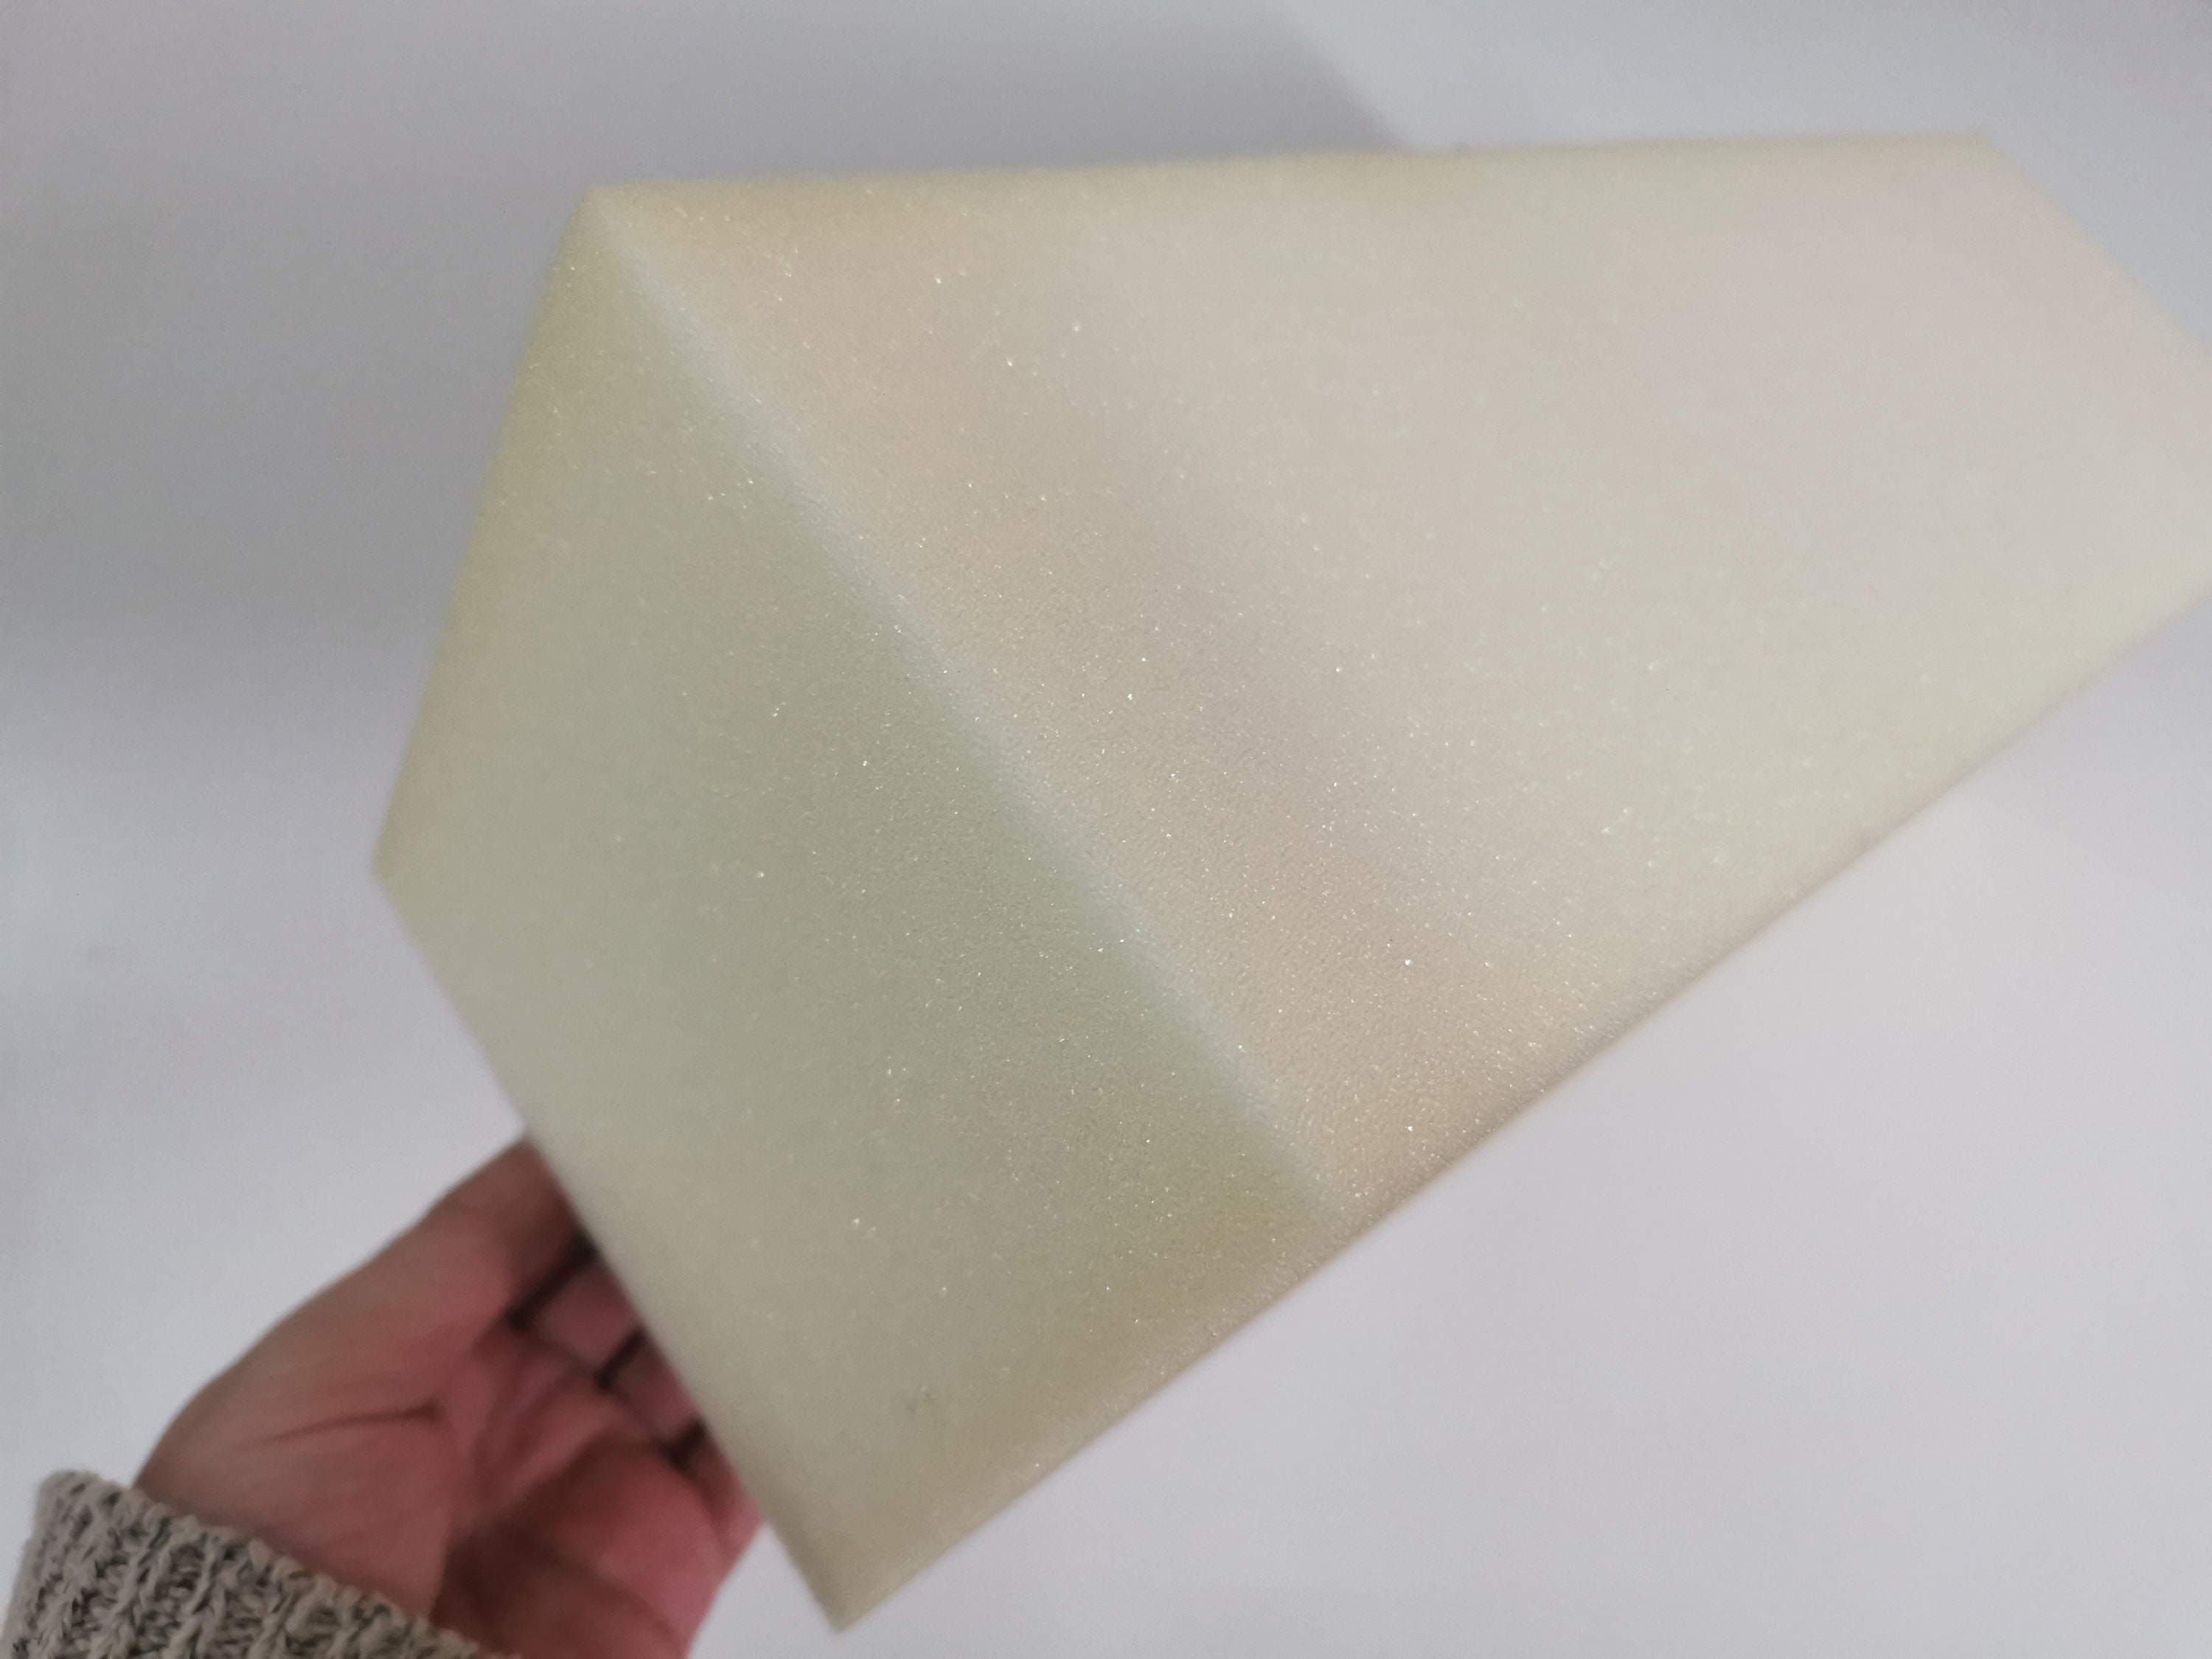 Foam Ninja Polyethylene Foam Sheet 12 X 12 X 4 Inch Thick 4 Pack